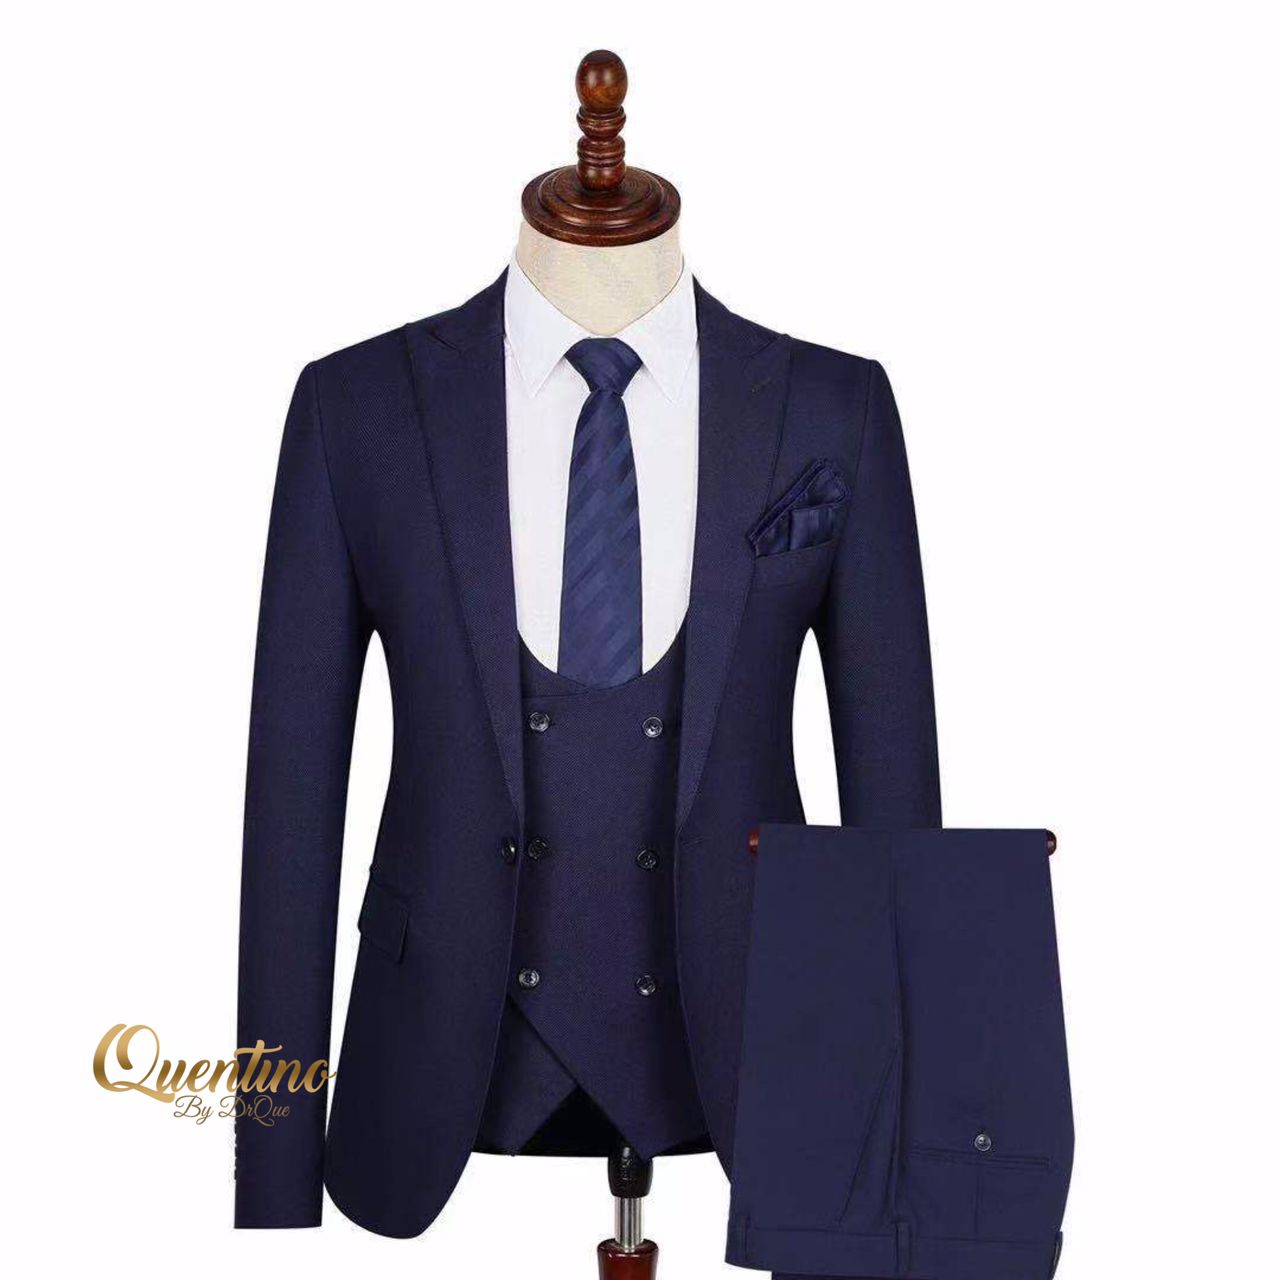 Quentino Celestial Blue Suit